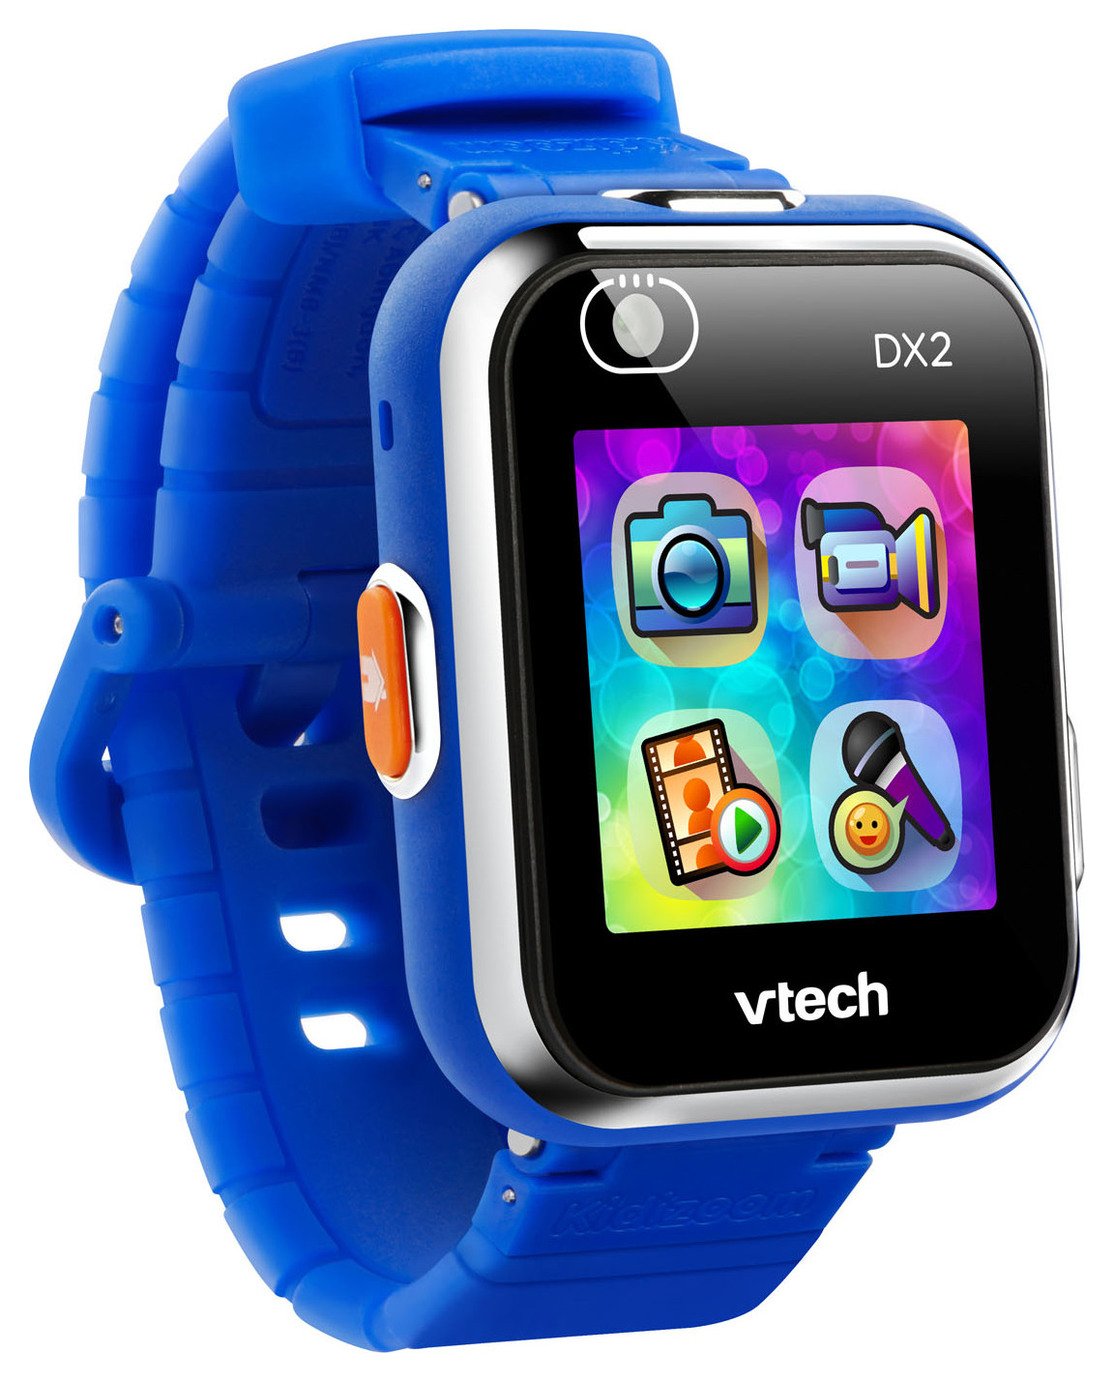 VTech Kidizoom Dual Camera Smart Watch Review